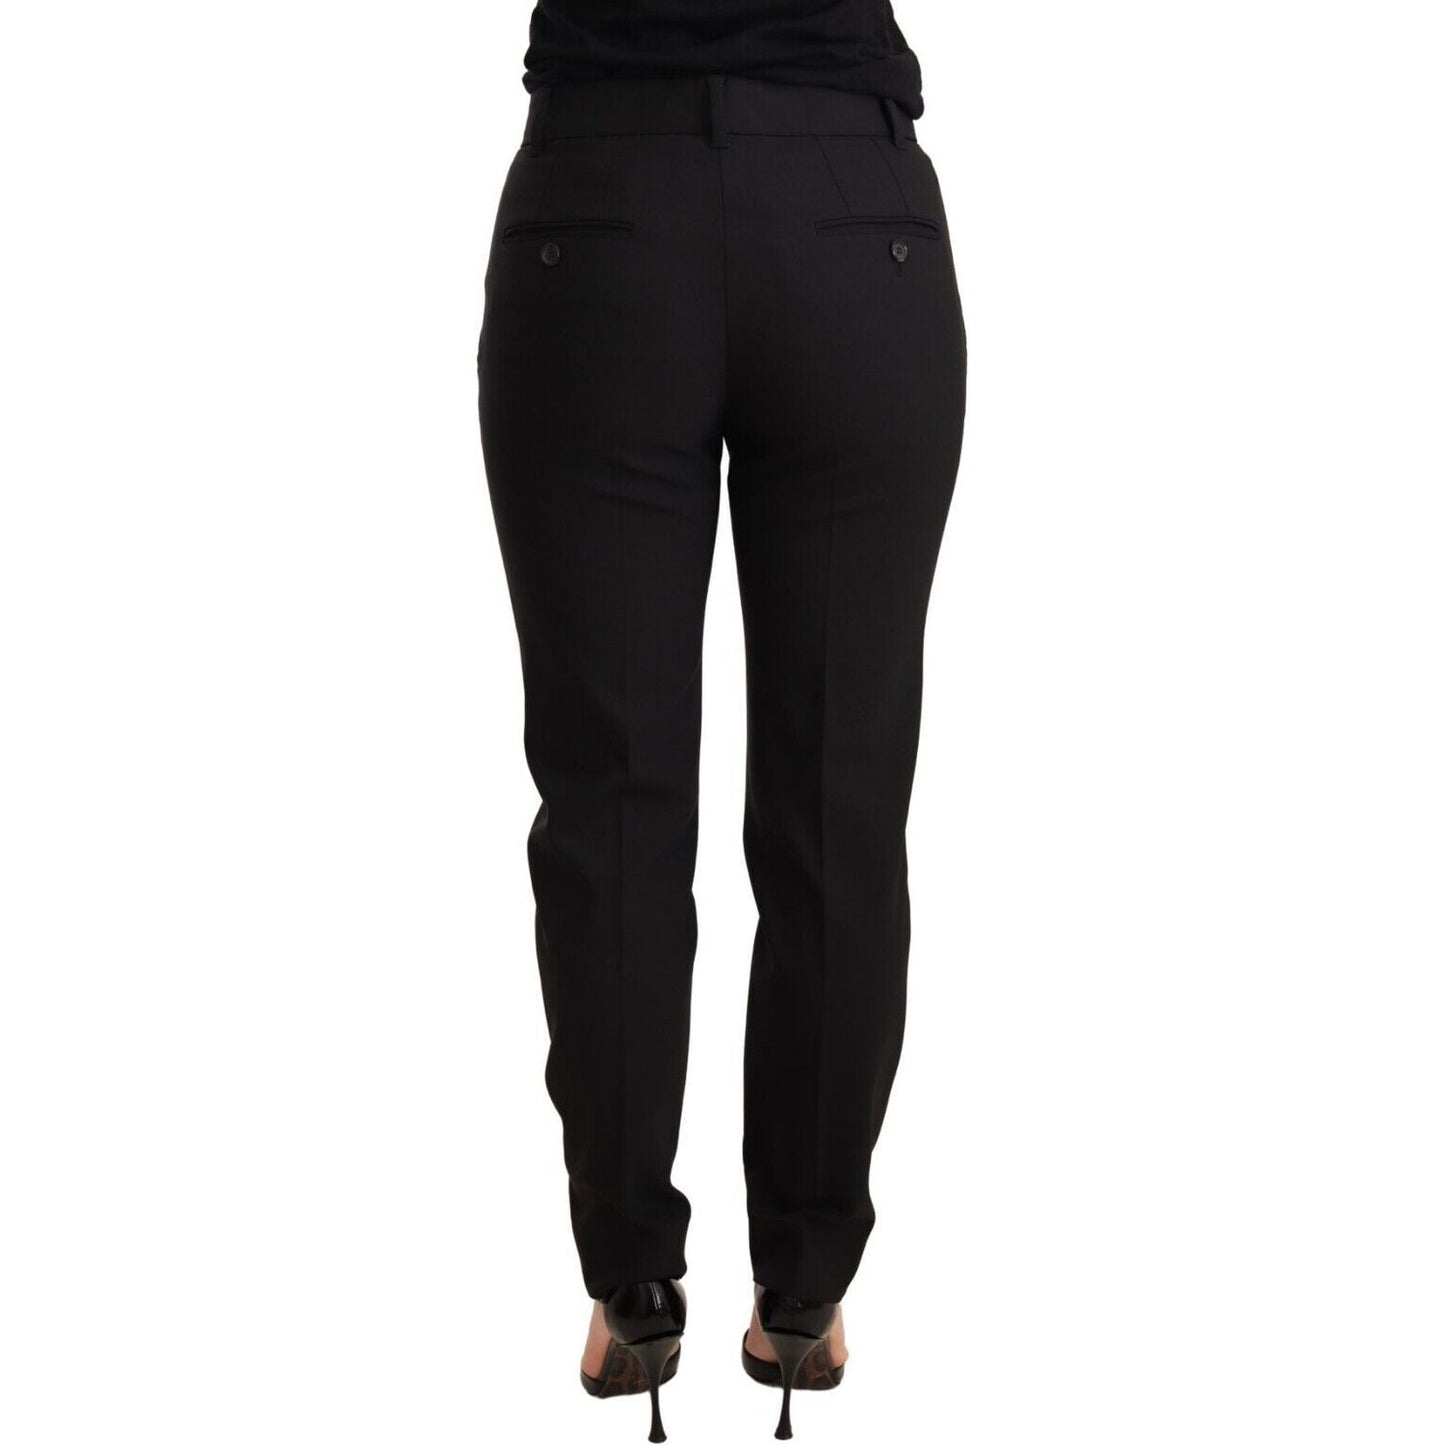 Dolce & Gabbana Elegant Tapered Virgin Wool Trousers black-tapered-women-trouser-virgin-wool-pants Jeans & Pants s-l1600-2-79-26c7aac3-7b2.jpg